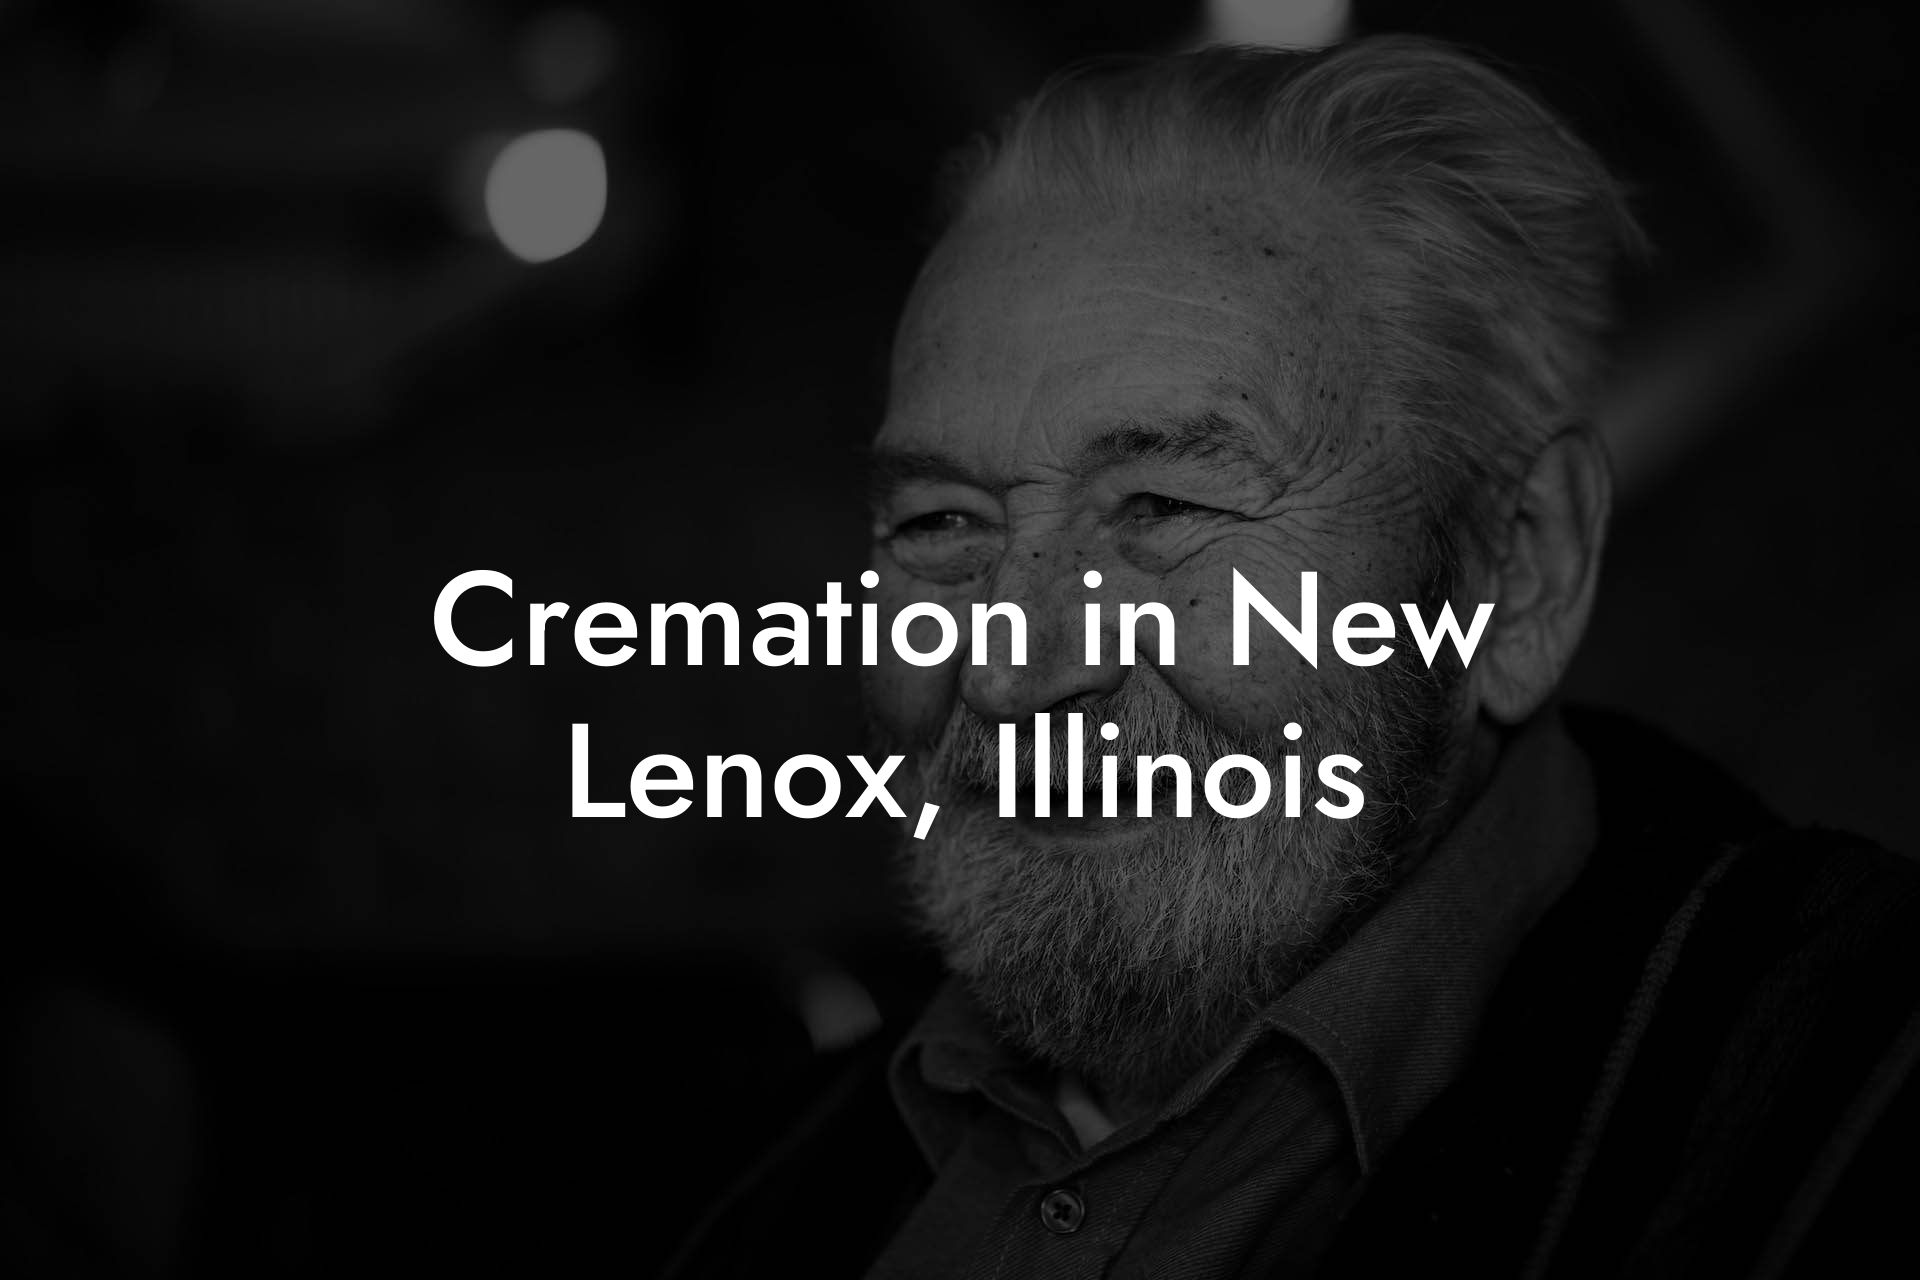 Cremation in New Lenox, Illinois